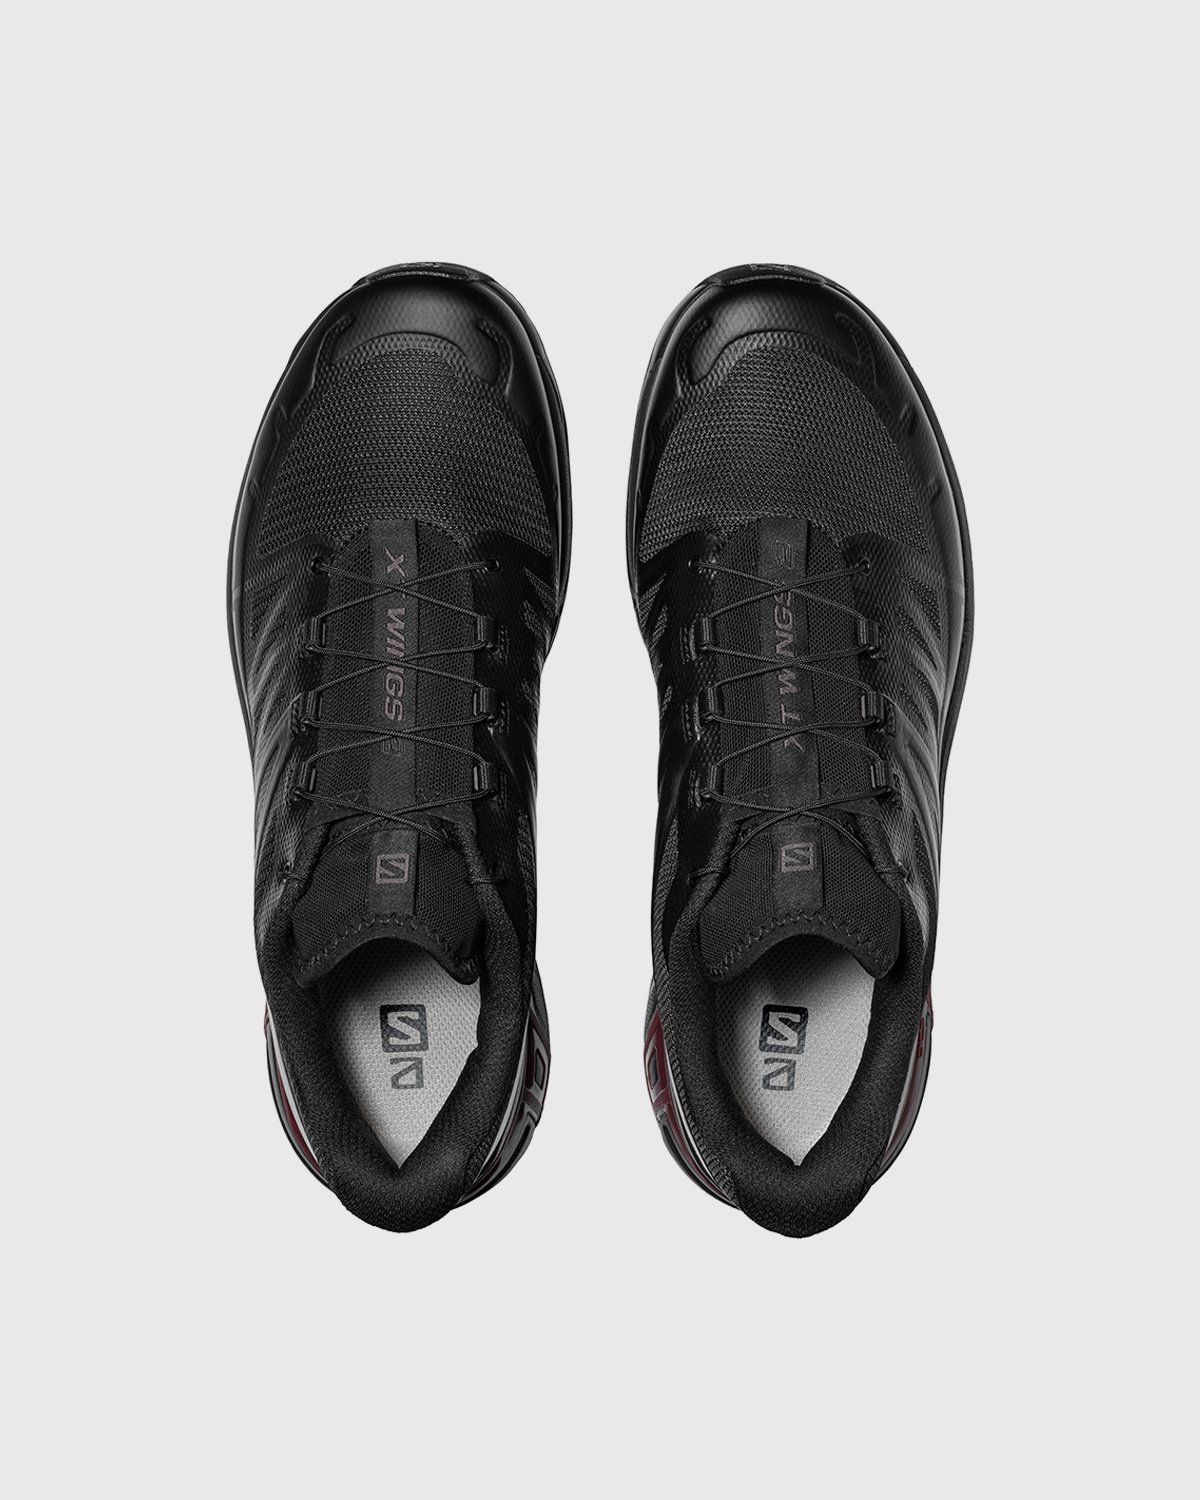 Salomon – XT-Wings 2 Advanced Black - Low Top Sneakers - Black - Image 4